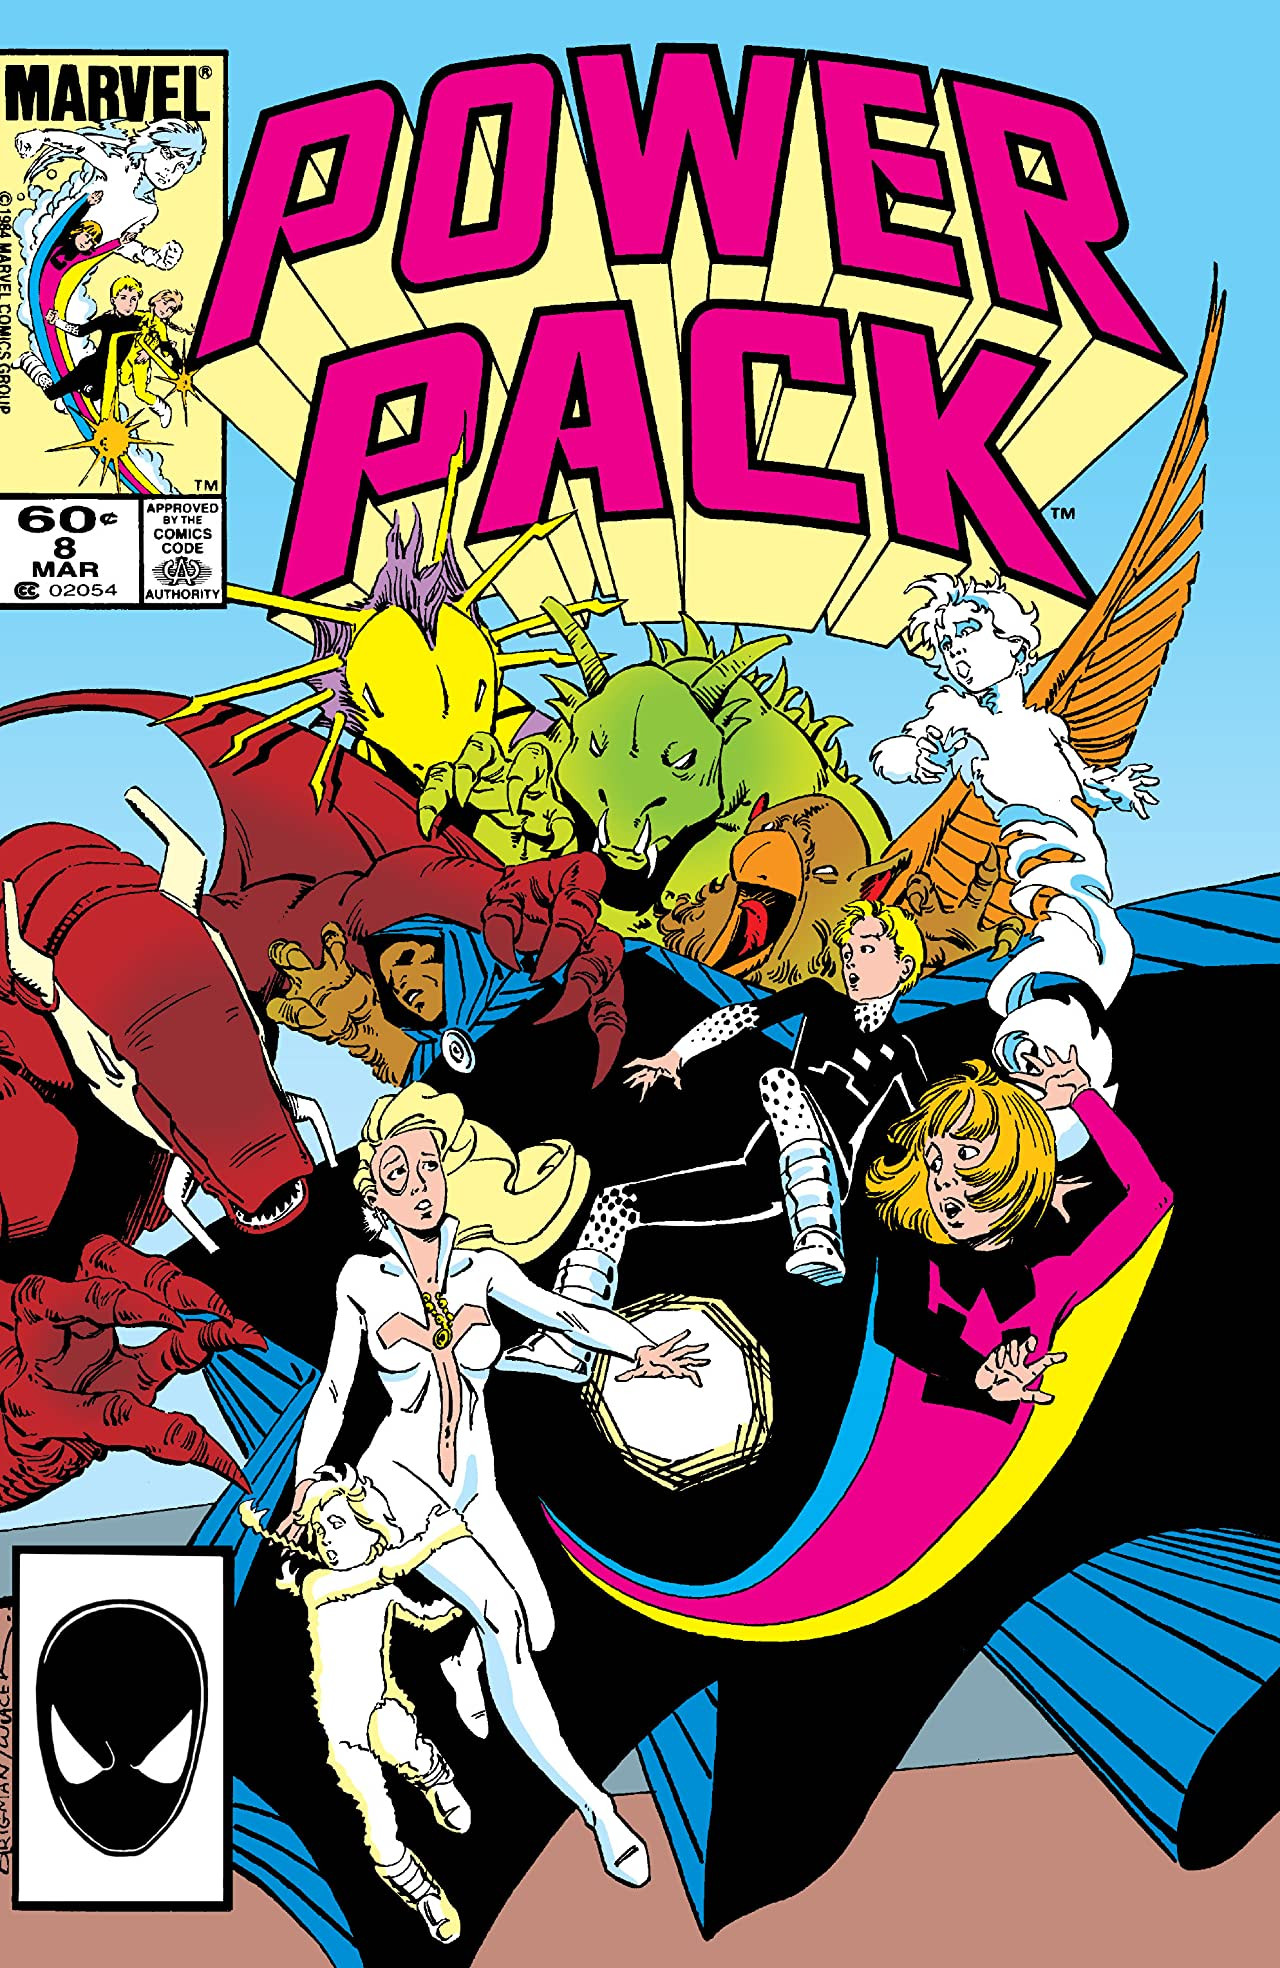 POWERPACK Марвел. A Power Packing комикс. Power Pack Marvel. Power pack комикс